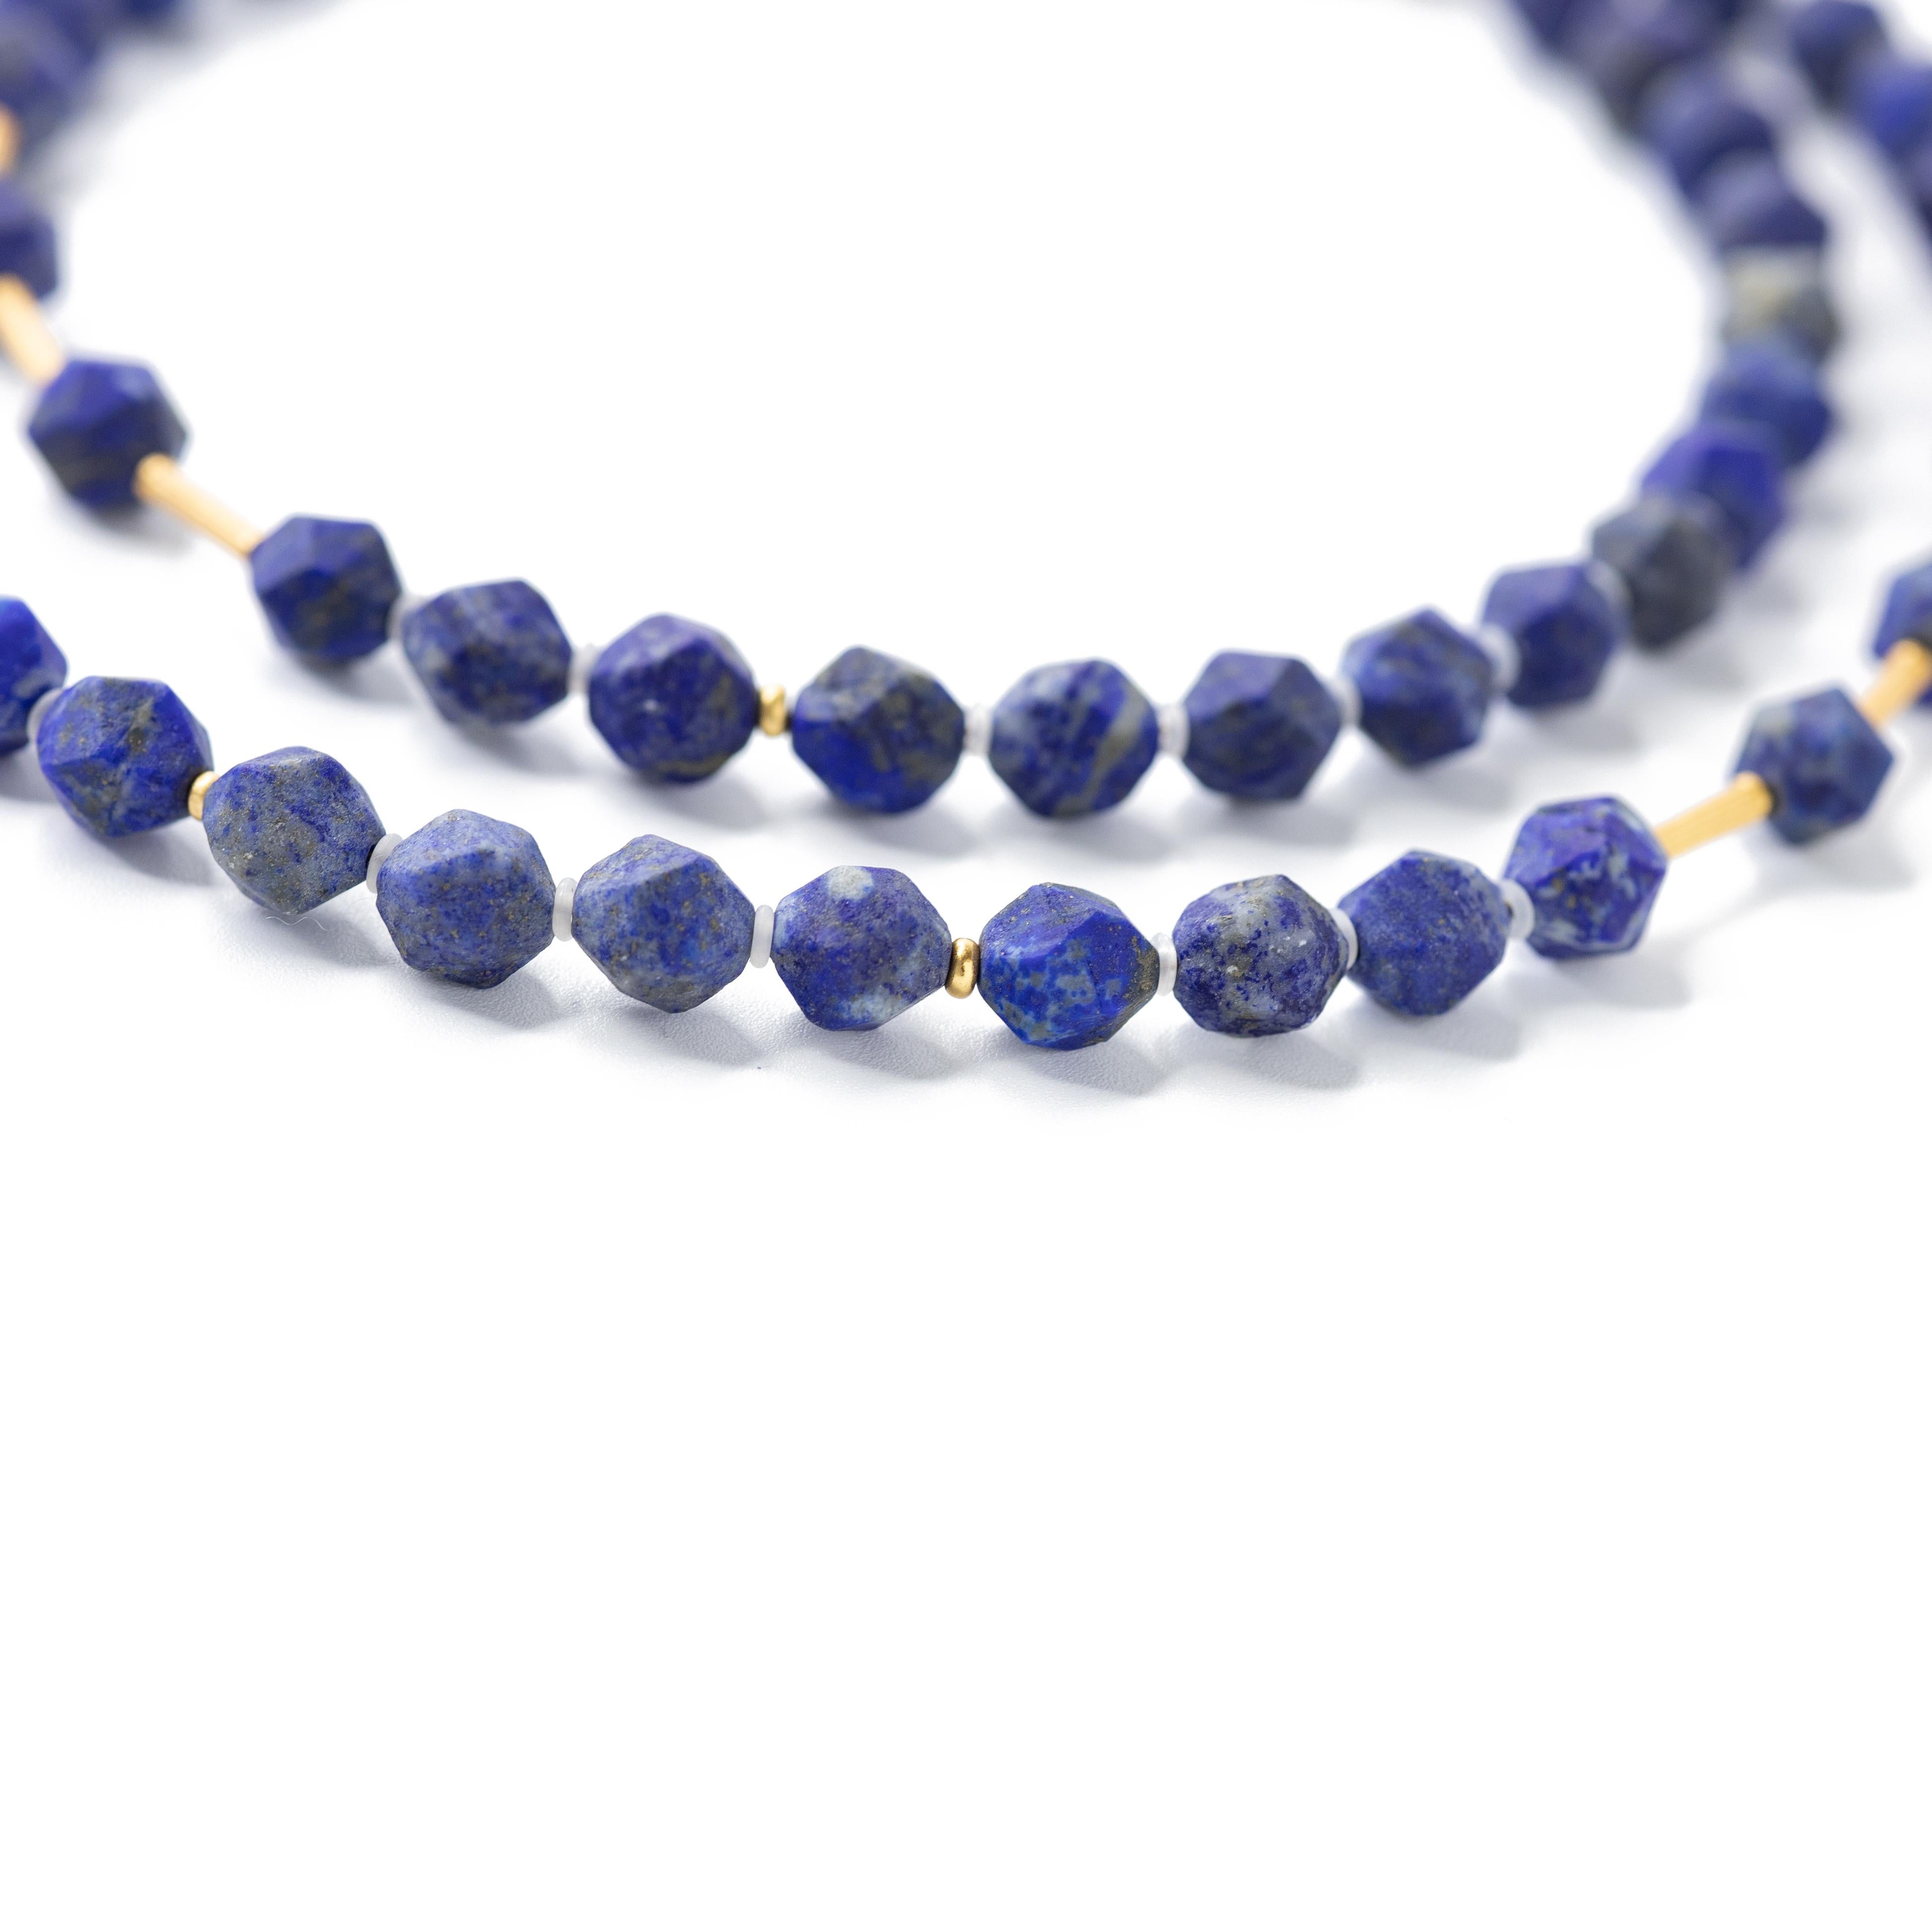 Artisan Lapis Lazuli Necklace - Blue Madrid Lapis Necklace by Bombyx House For Sale